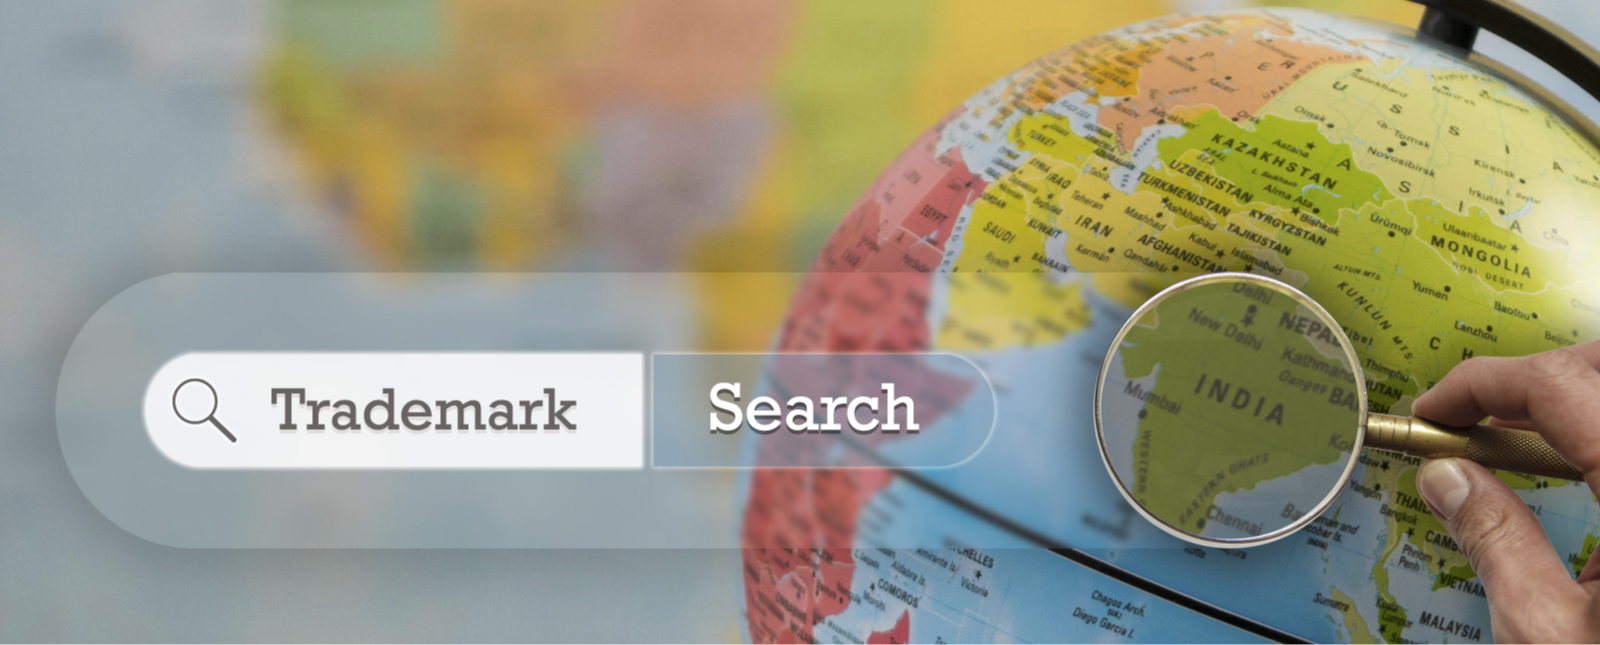 Trademark Search